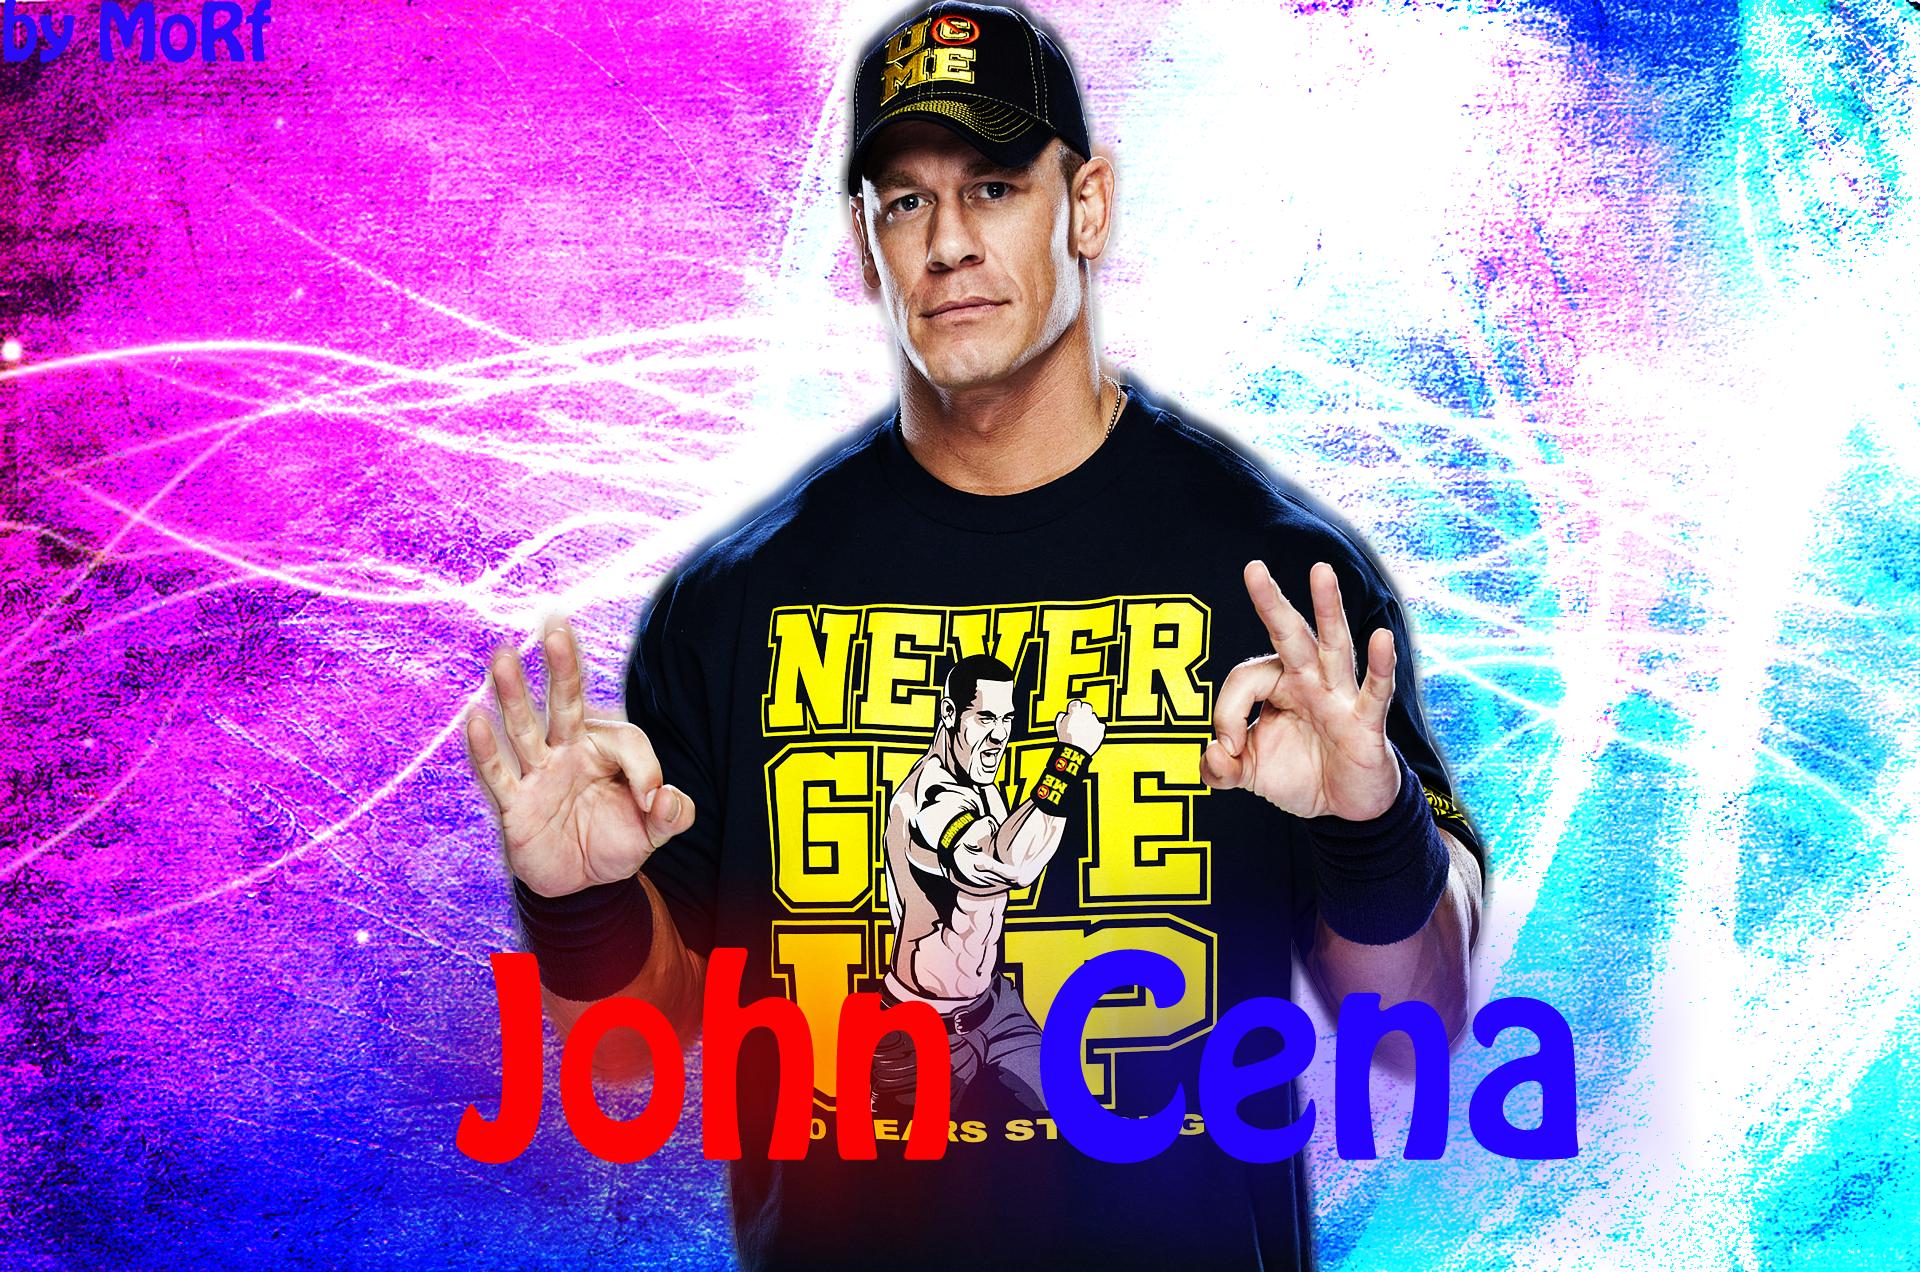 Wwe John Cena Wallpaper